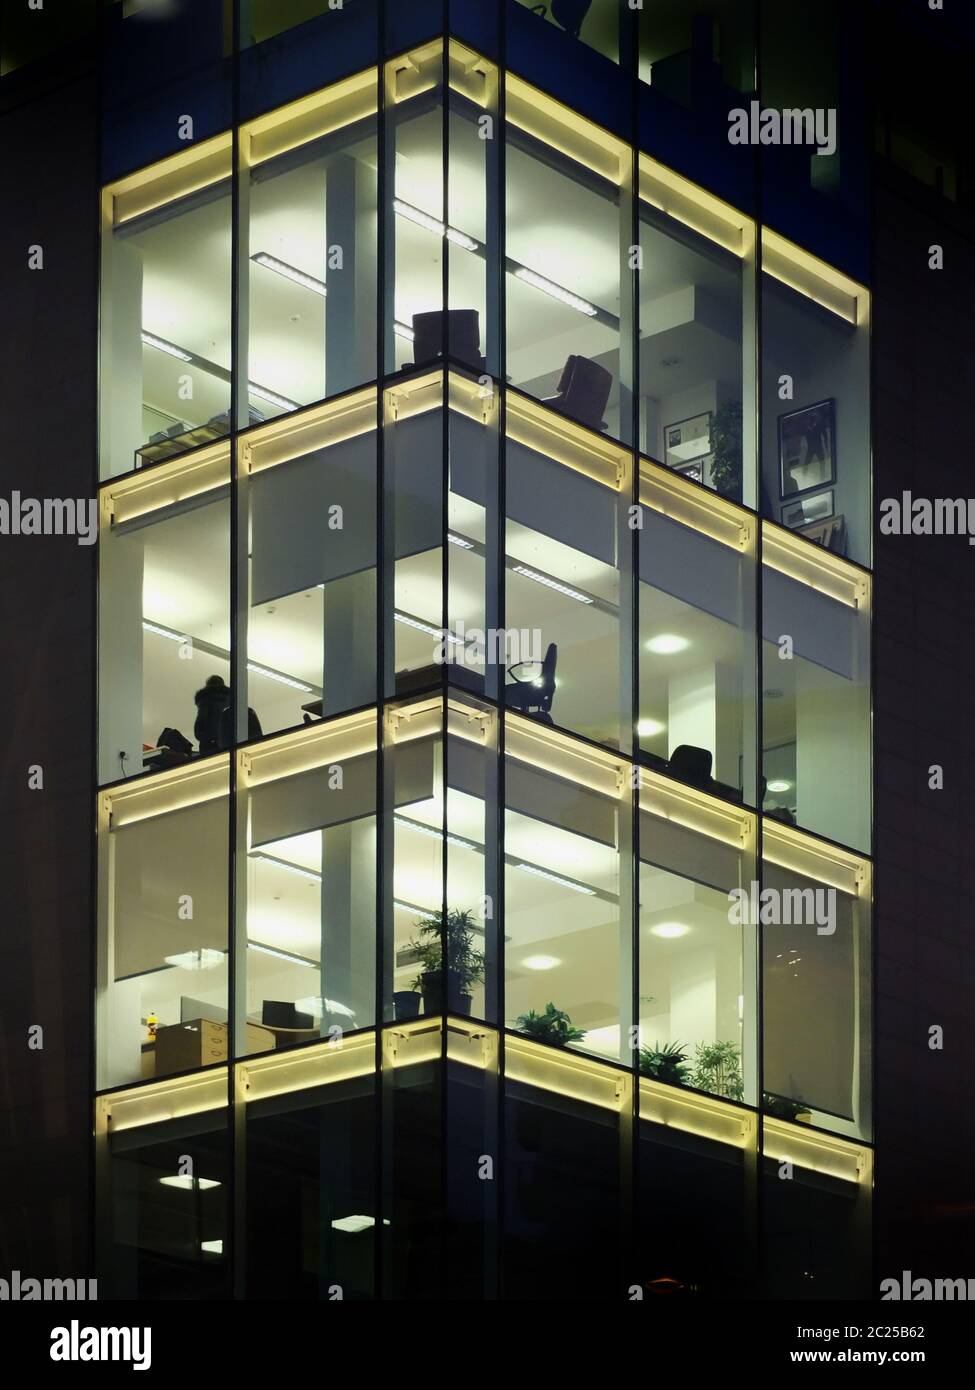 modern office building illuminated at night with geometric windows Stock Photo